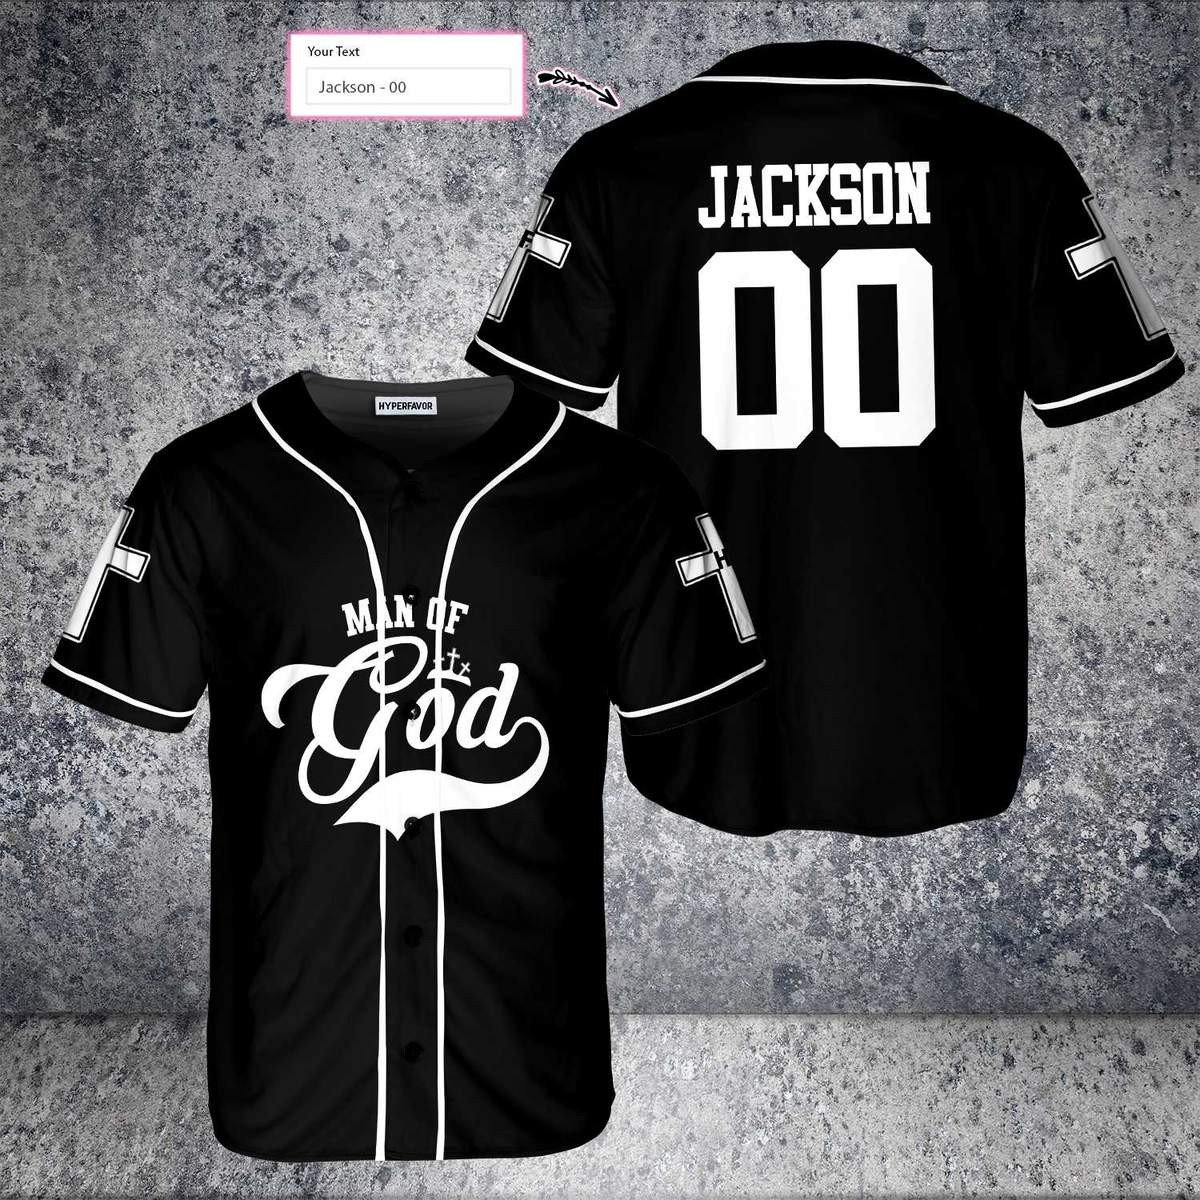 Personalized Jesus Baseball Jersey - Cross Baseball Jersey - Gift For Christians - Man Of God Custom Printed 3D Baseball Jersey Shirt For Men Women